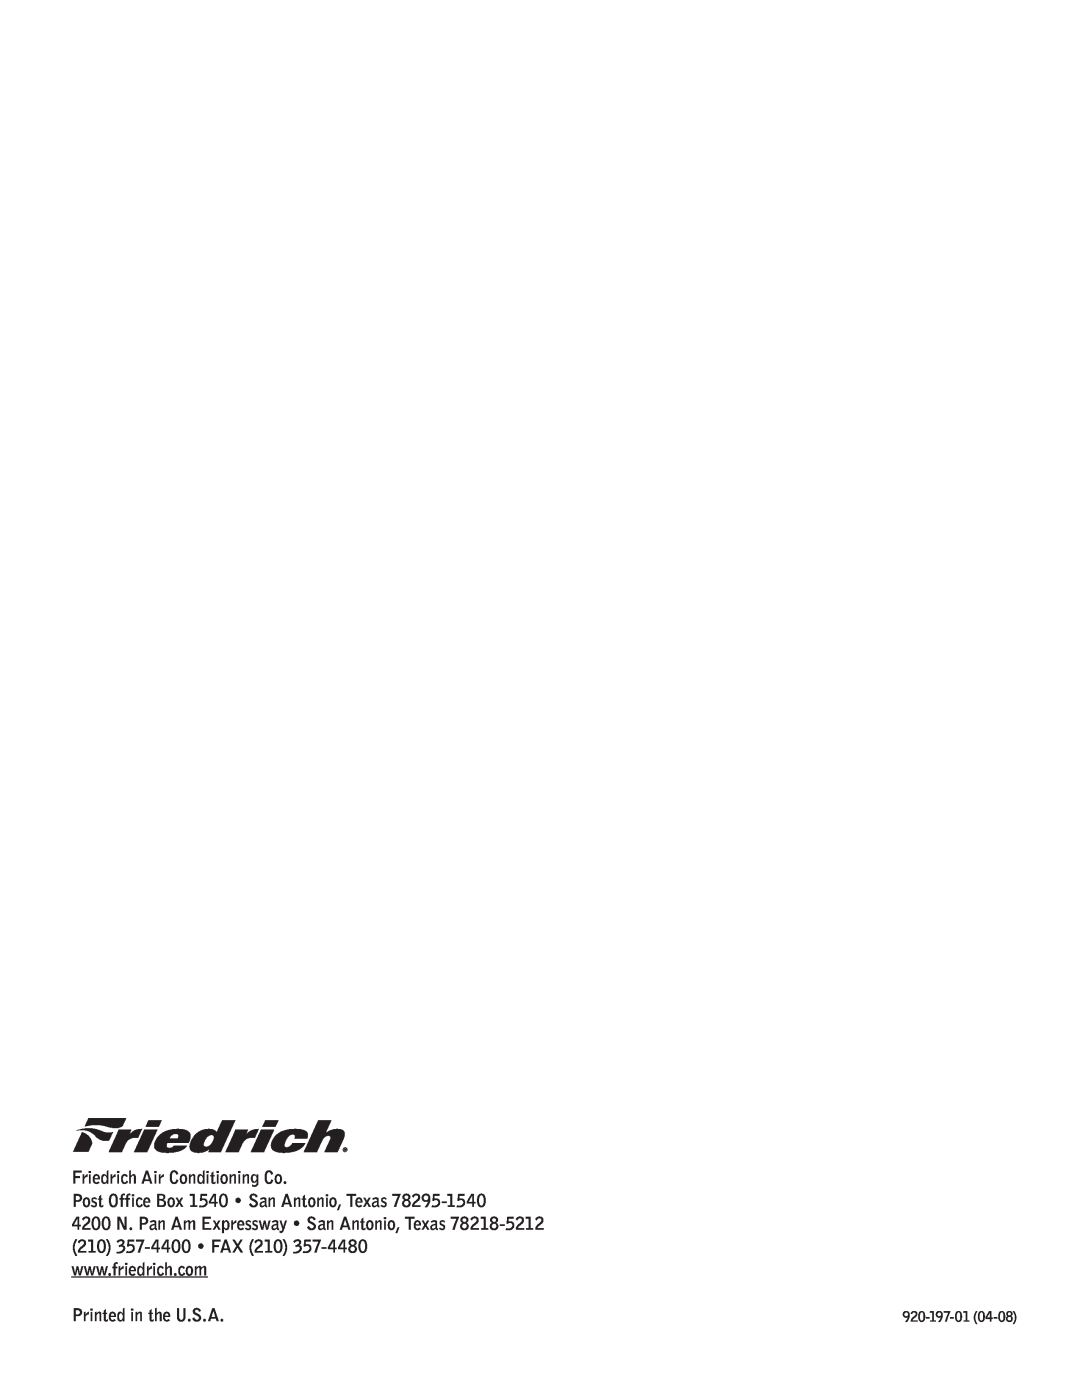 Friedrich YQ07, EQ08 operation manual Friedrich Air Conditioning Co, Post Office Box 1540 San Antonio, Texas, 920-197-01 